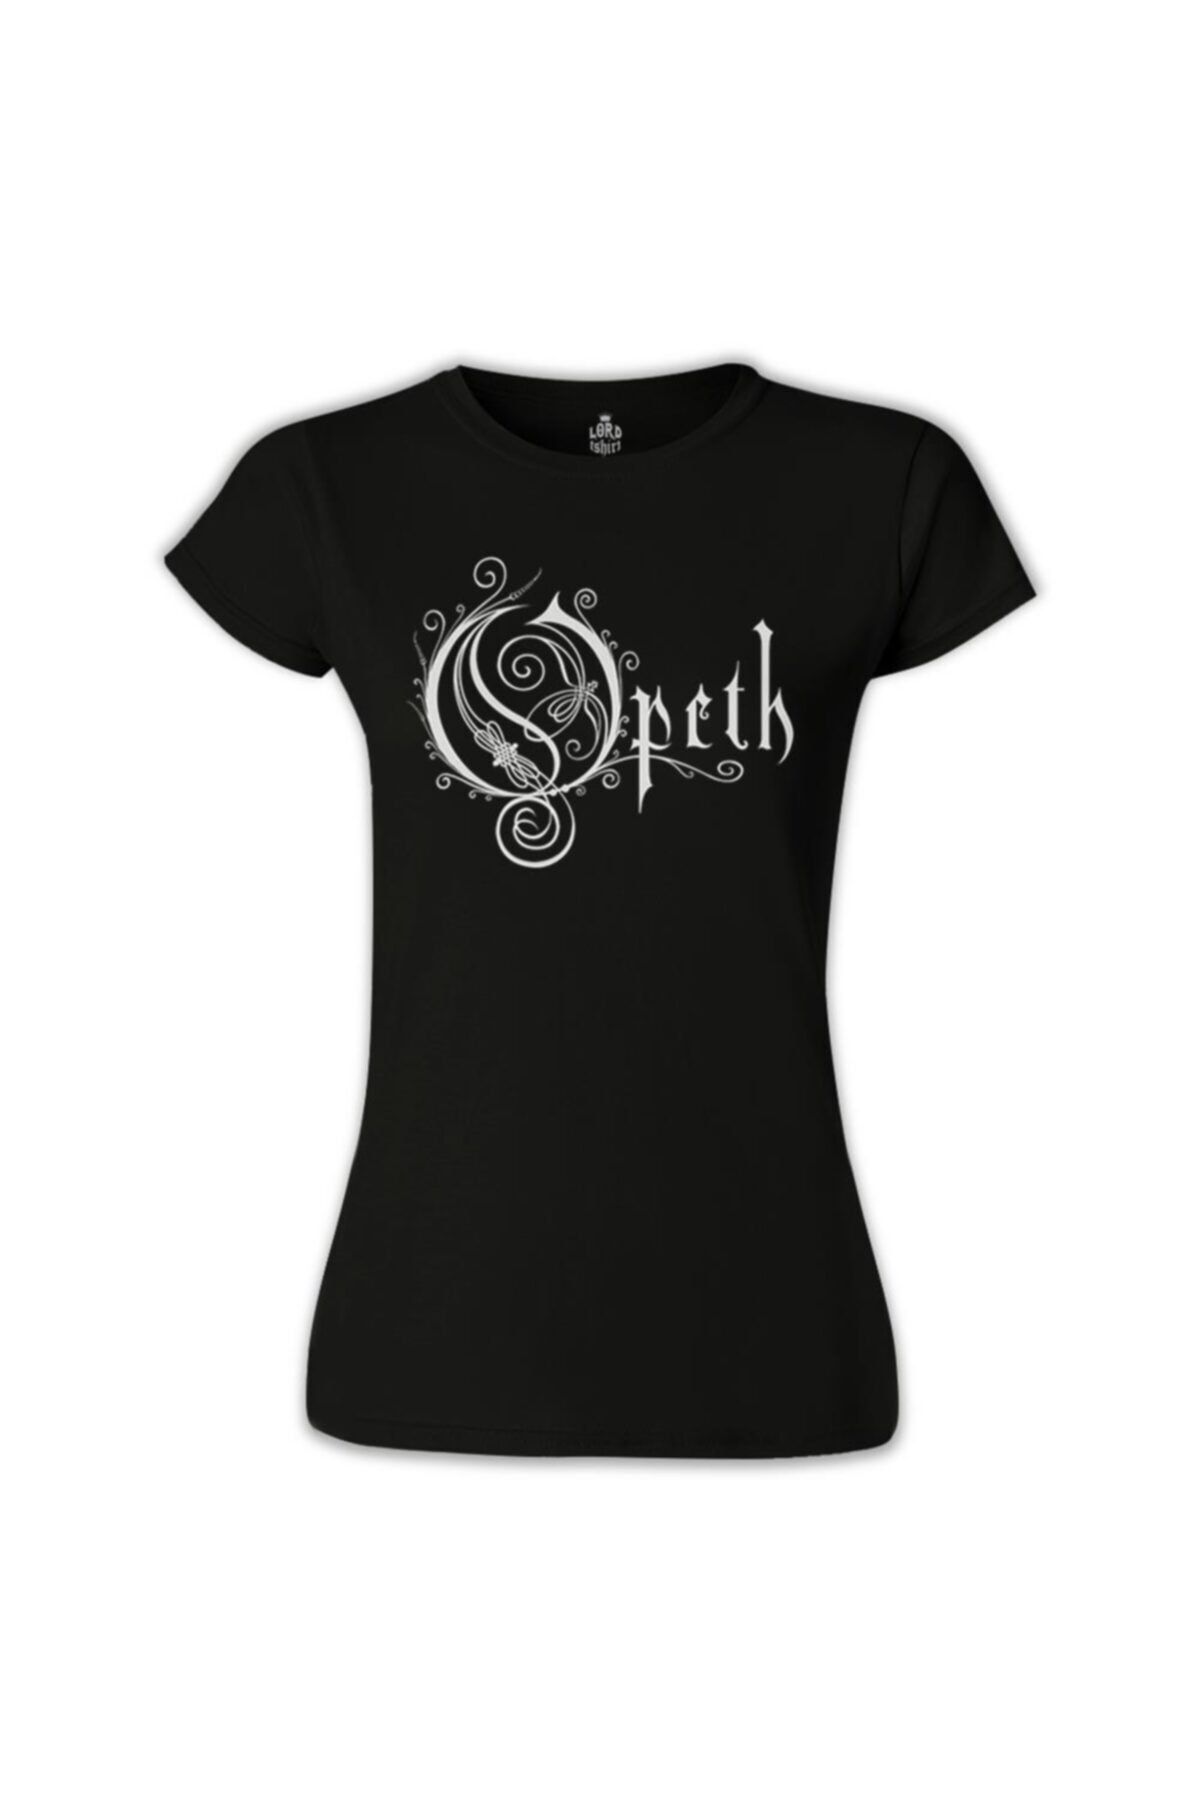 Lord T-Shirt Kadın Siyah Opeth Logo T-Shirt BS-761